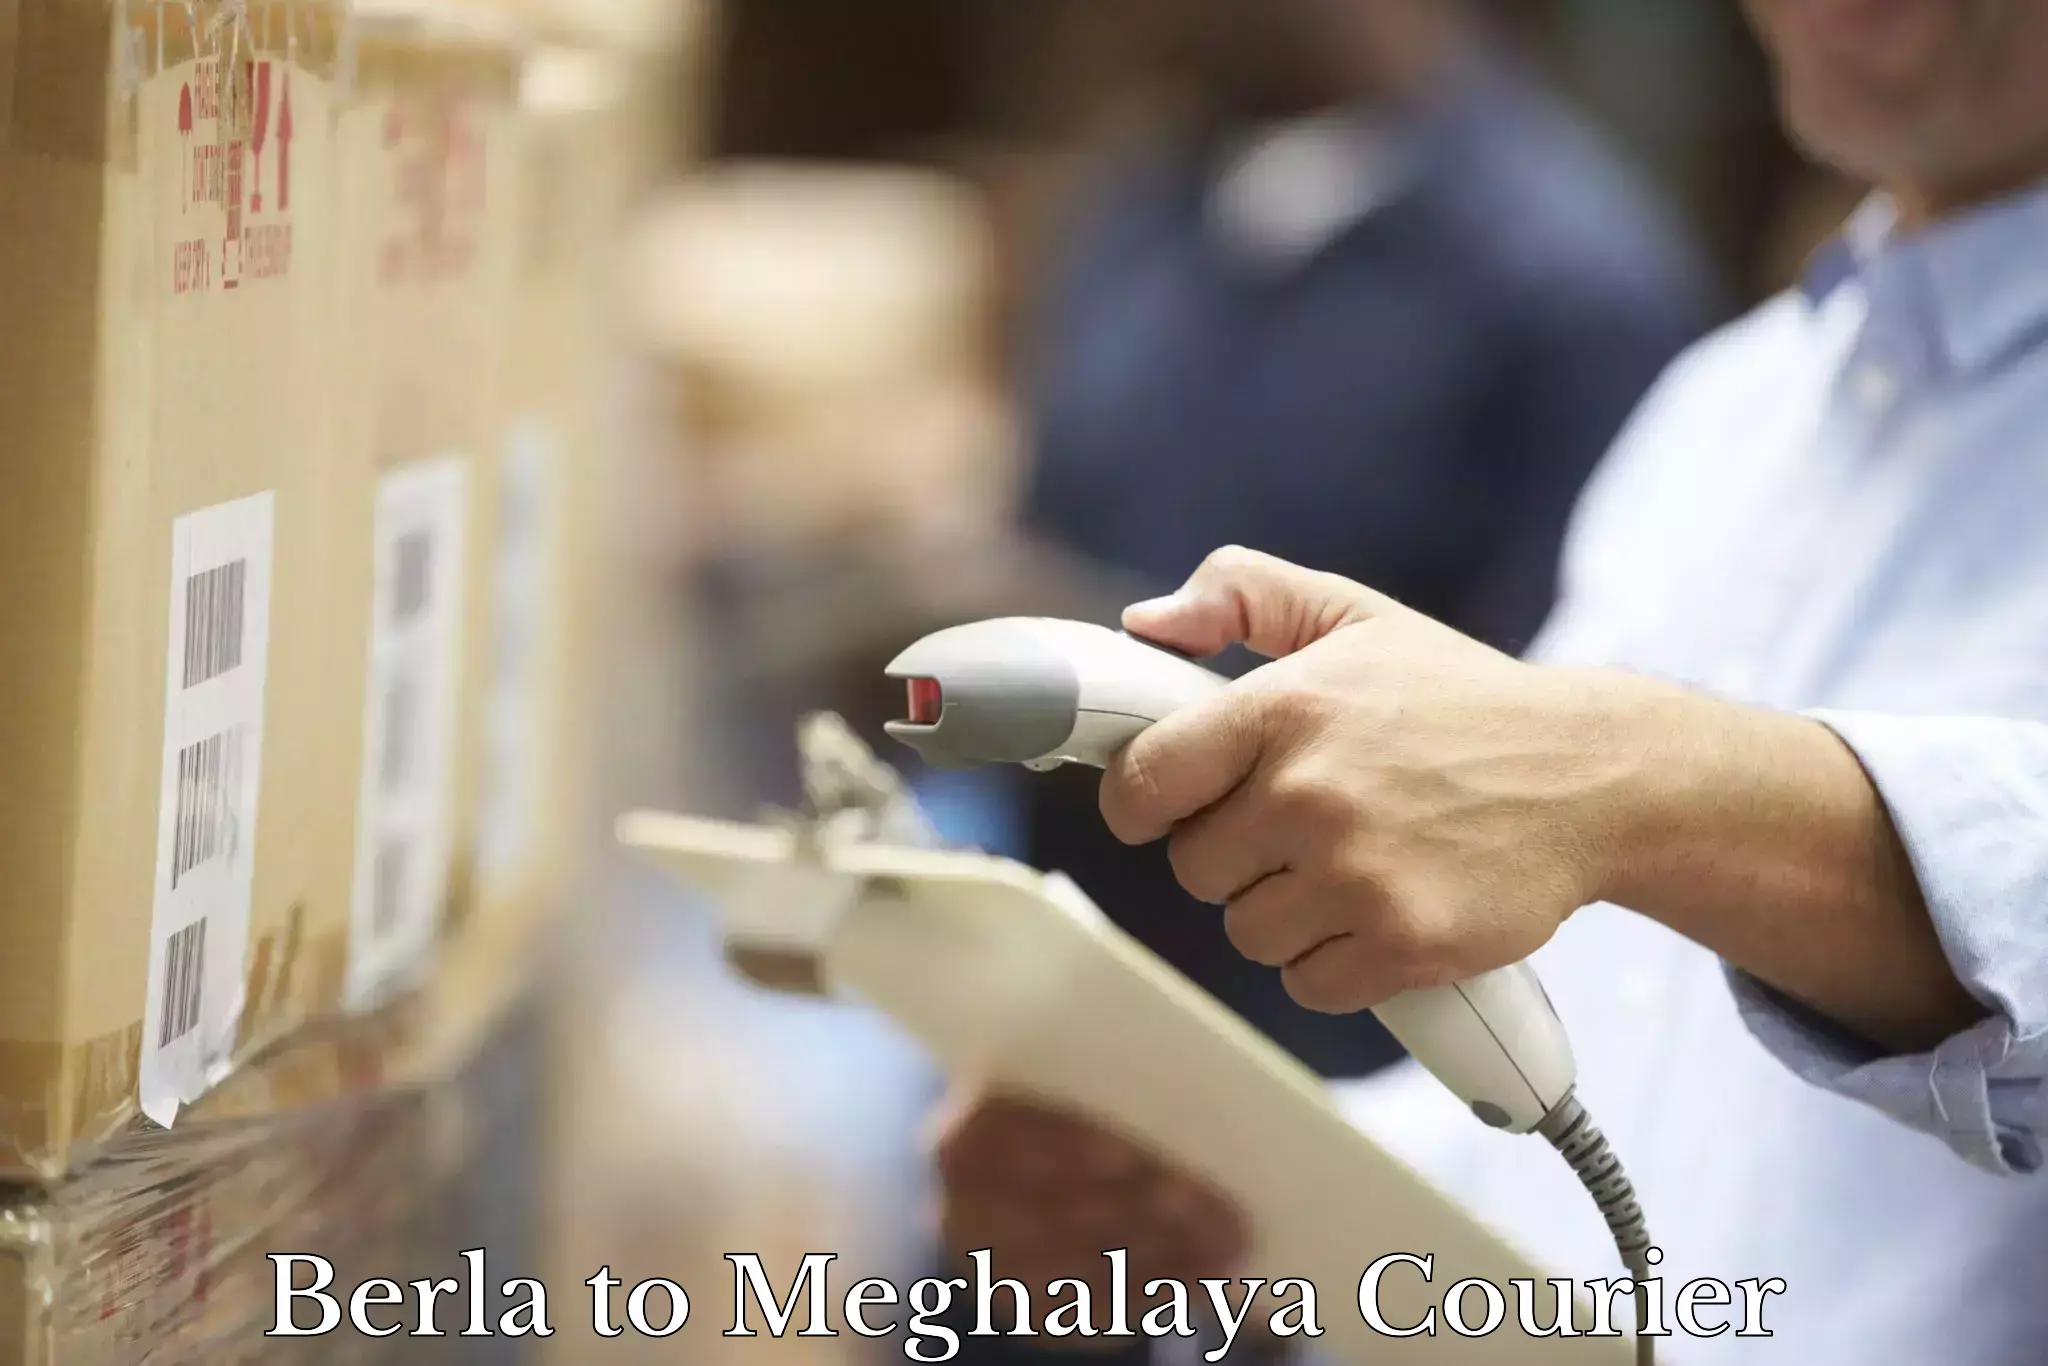 Courier service efficiency Berla to Meghalaya